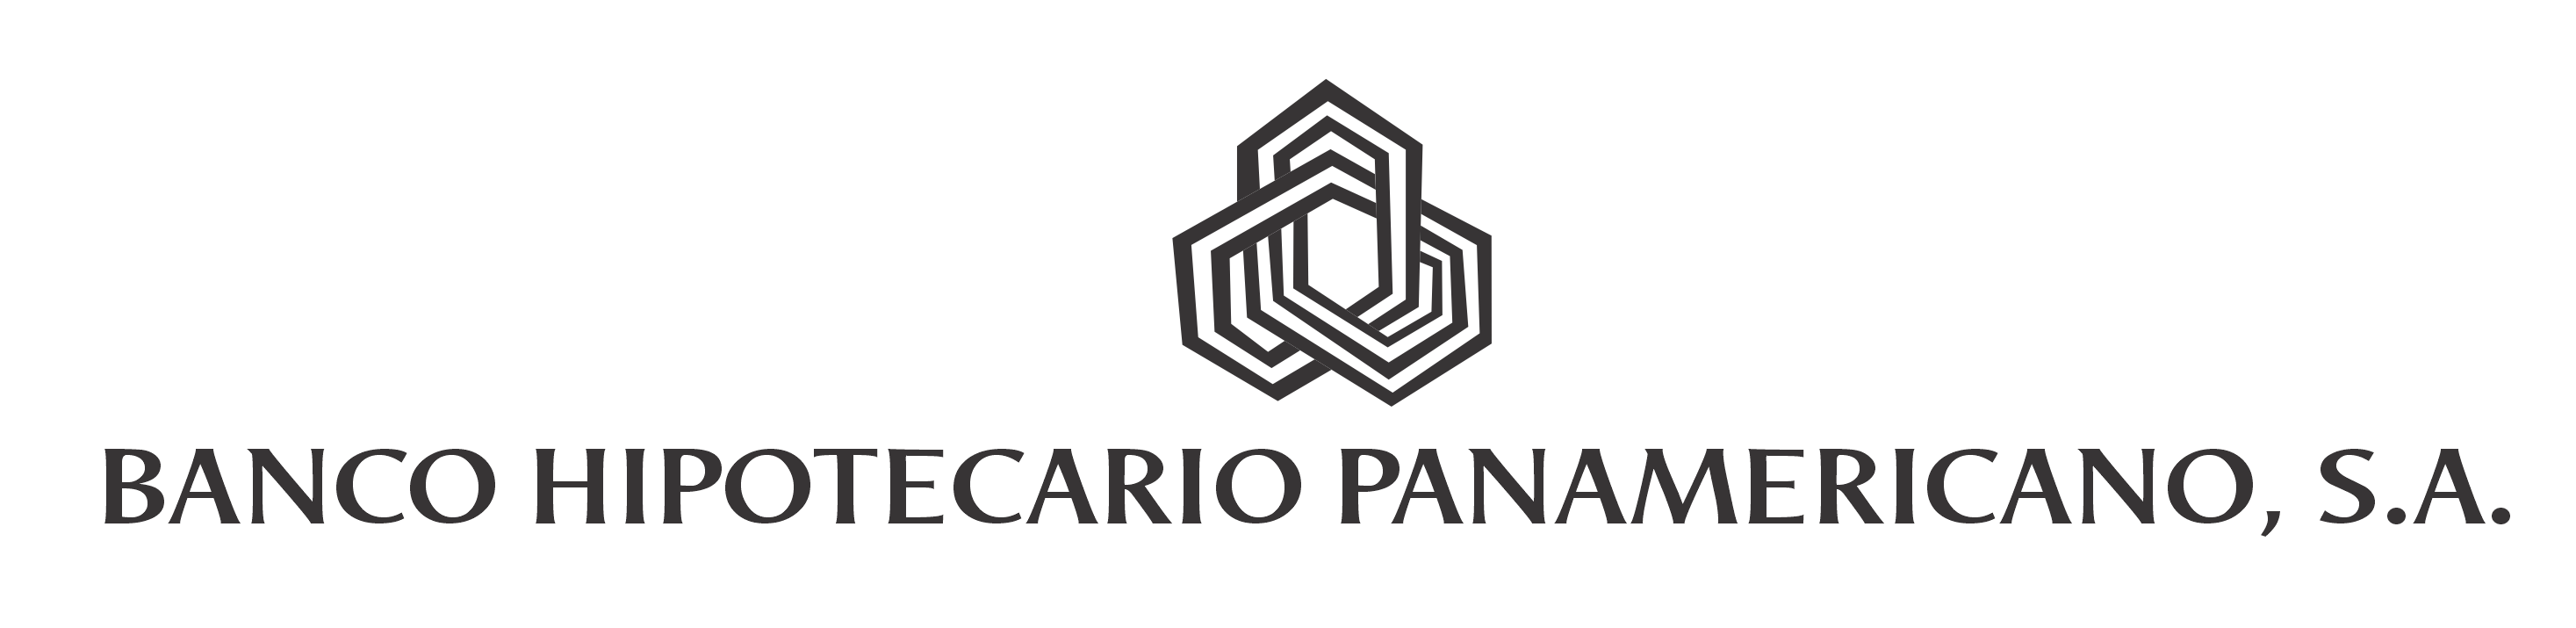 Banco Hipotecario Panamericano